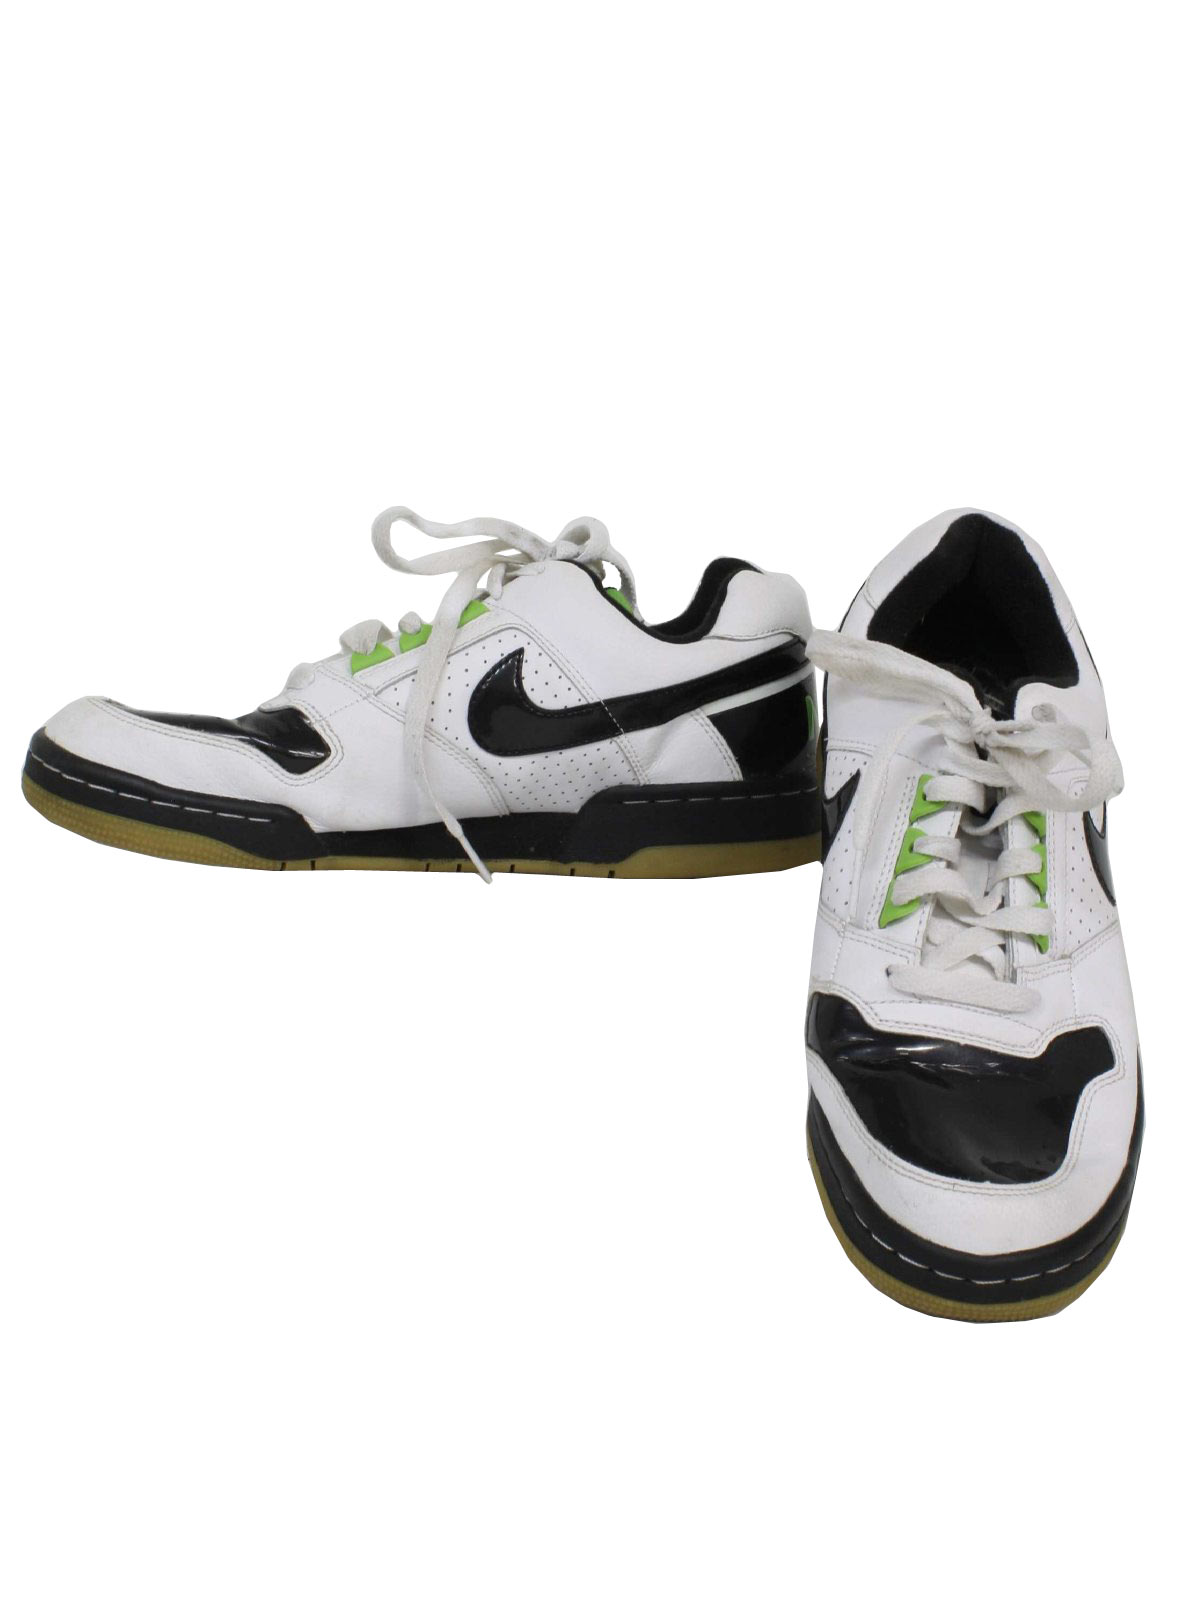 nike tennis shoes 1990s